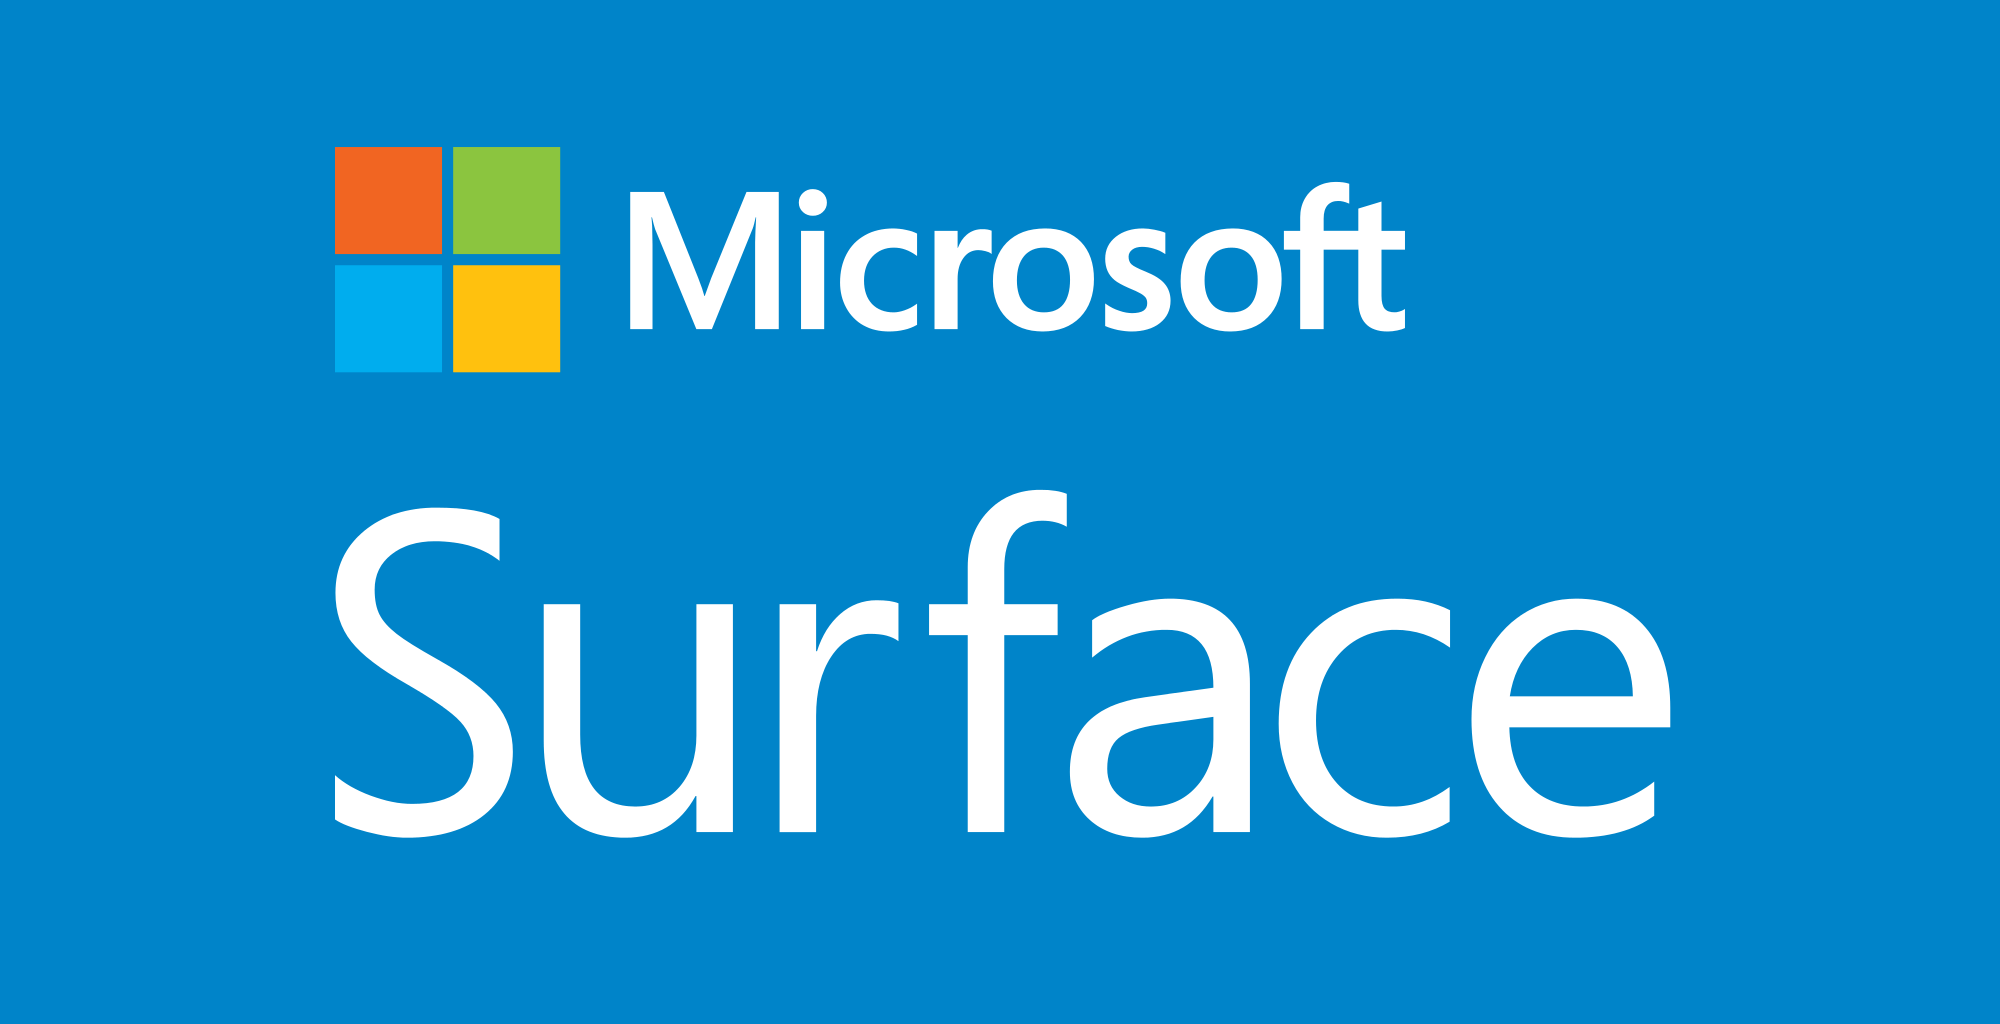 Microsoft Surface Book Logo - Image - Microsoft Surface logo 2015.svg.png | Logopedia | FANDOM ...